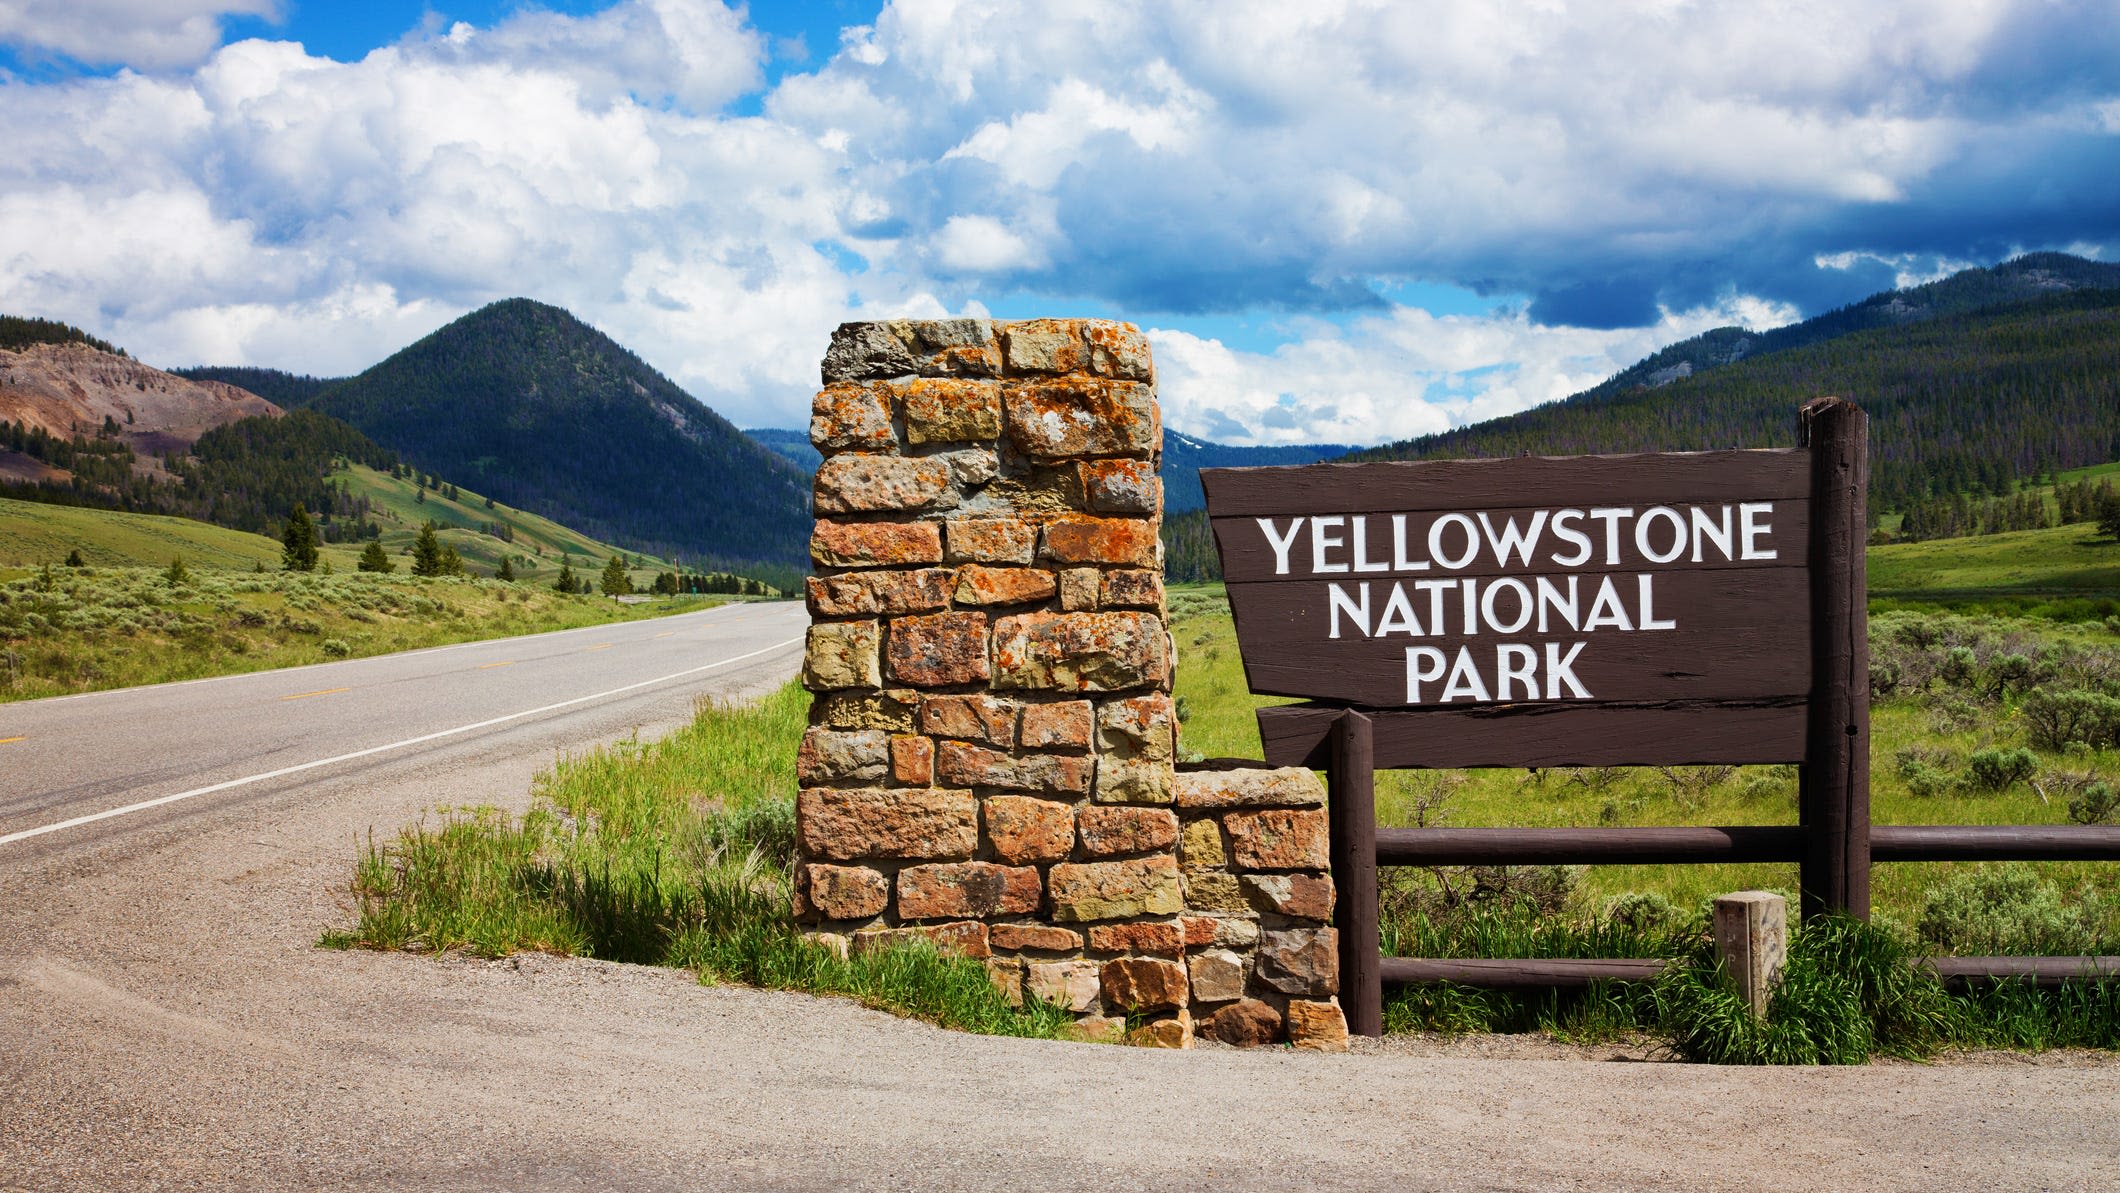 Man fatally shot at Yellowstone National Park threatened mass shooting, authorities say